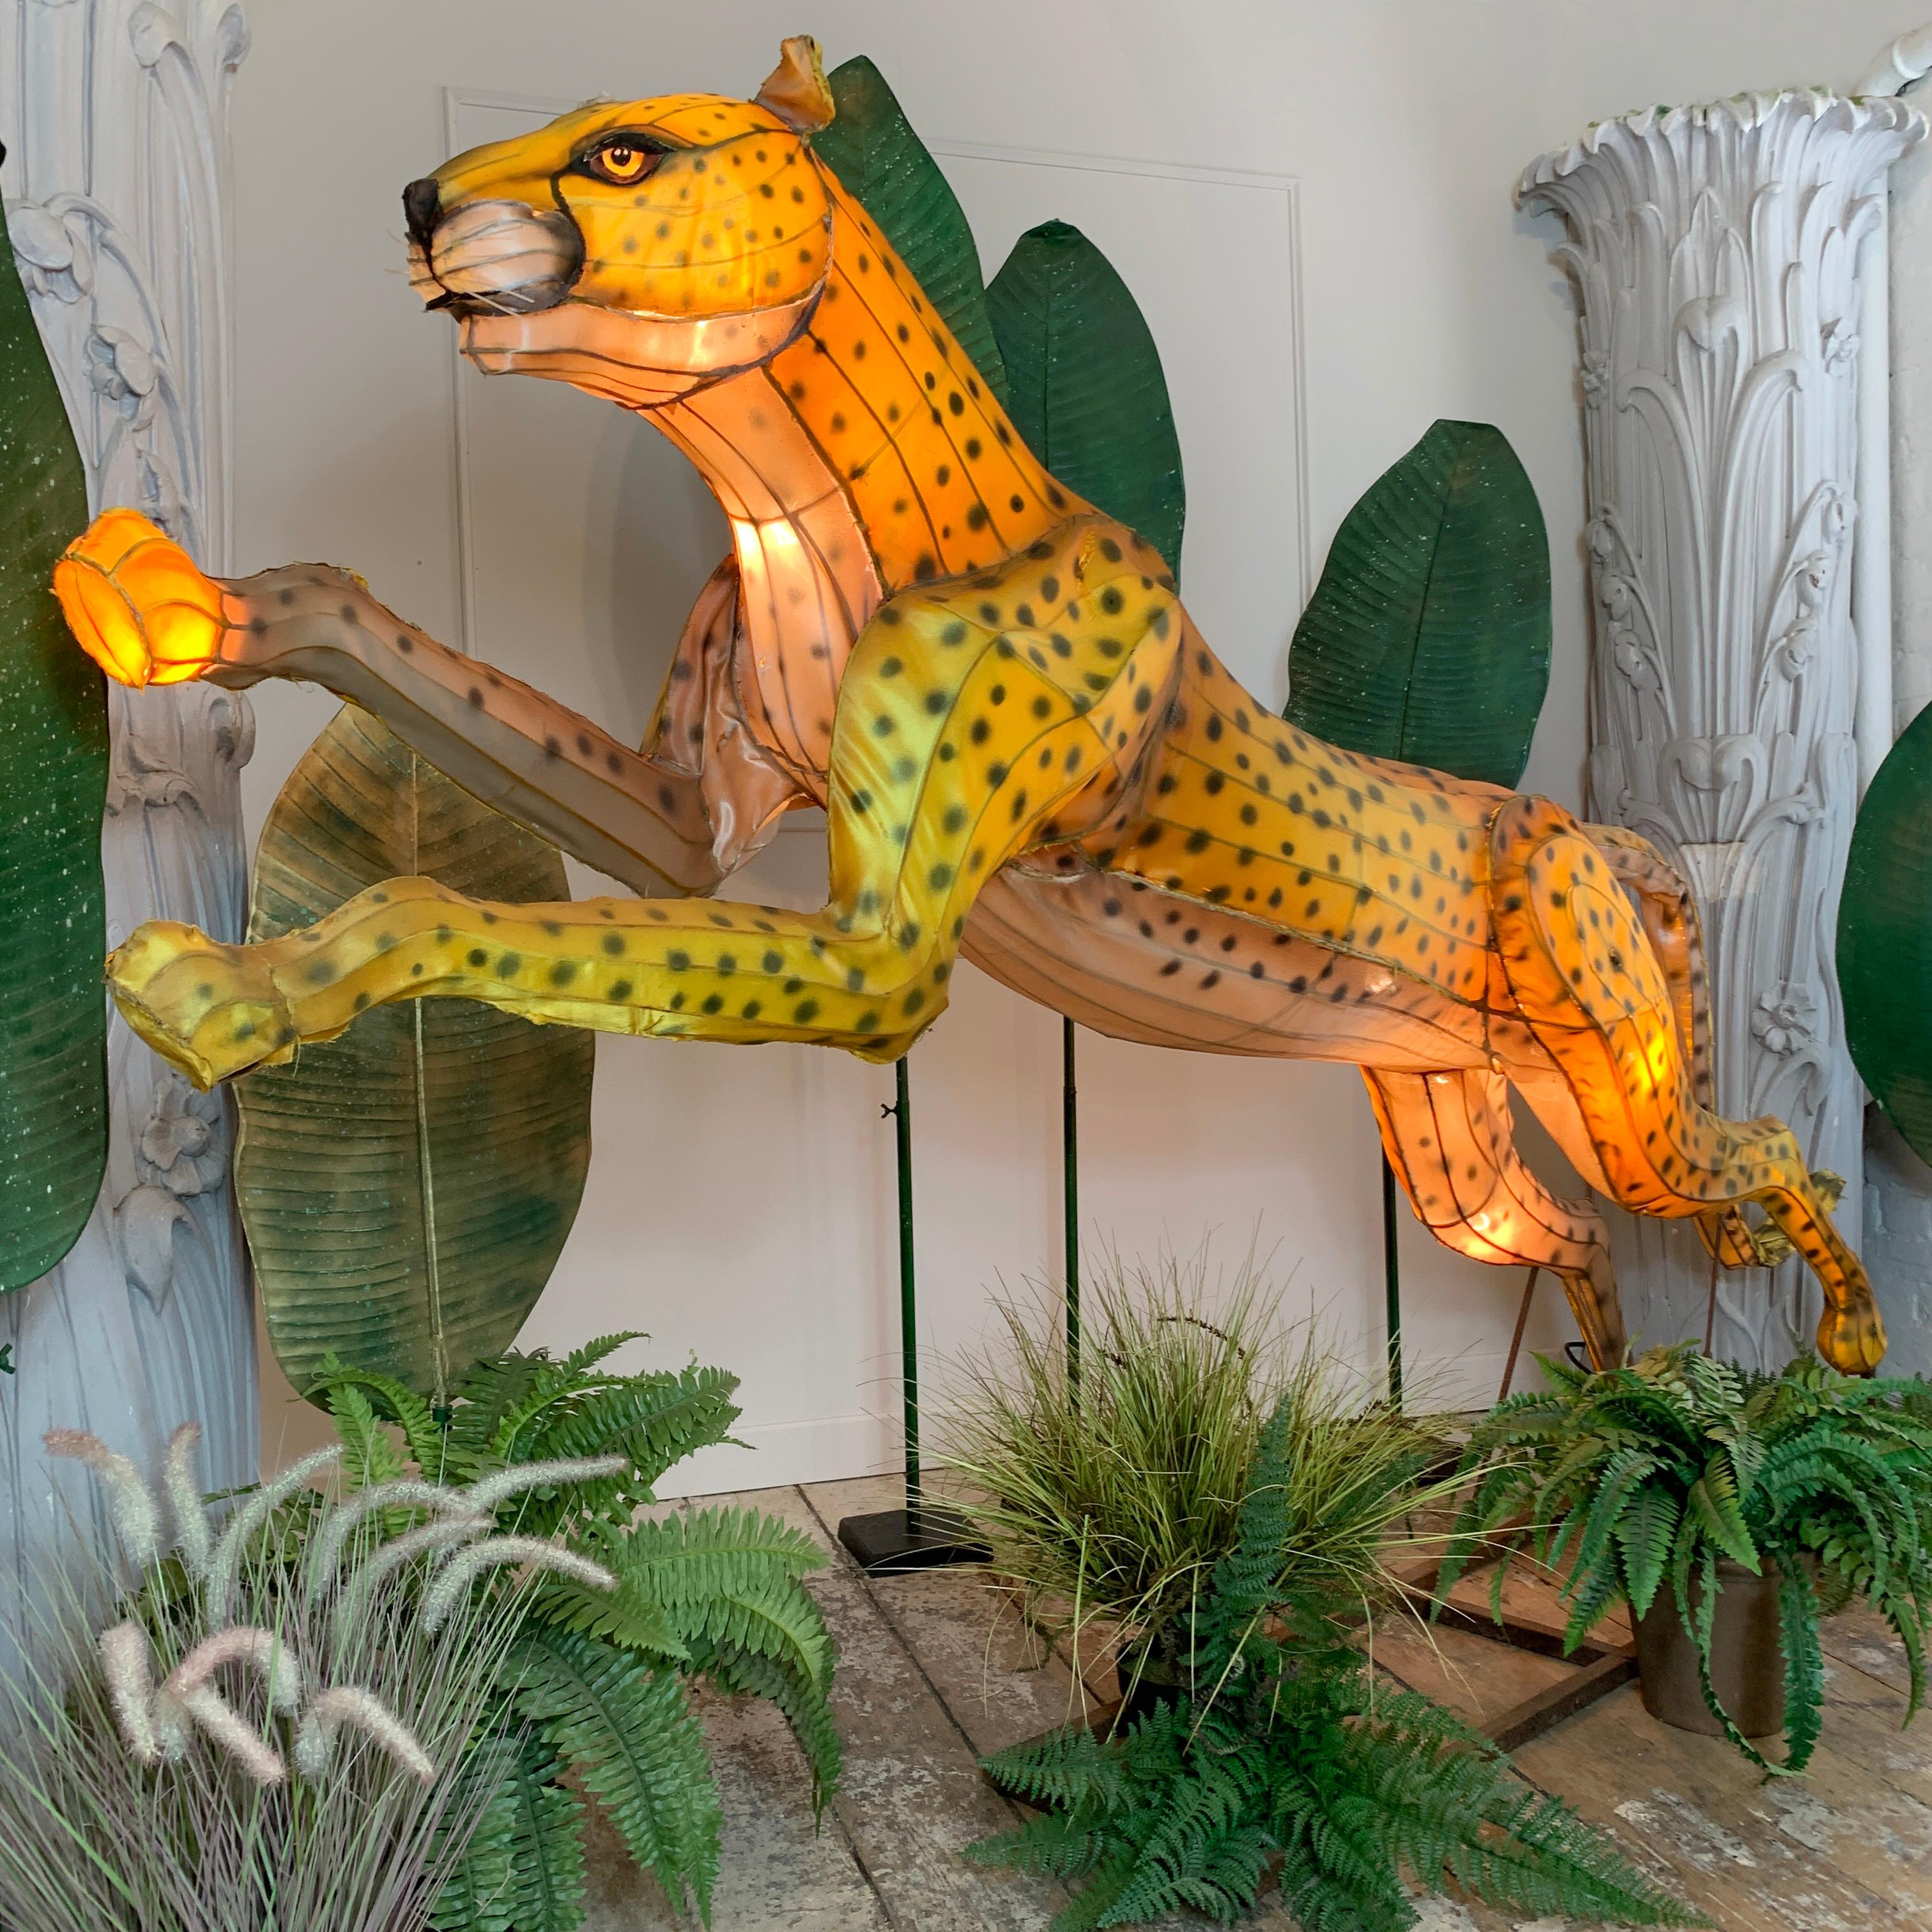 Huge Illuminated Majestic Cheetah from London Zoo 9